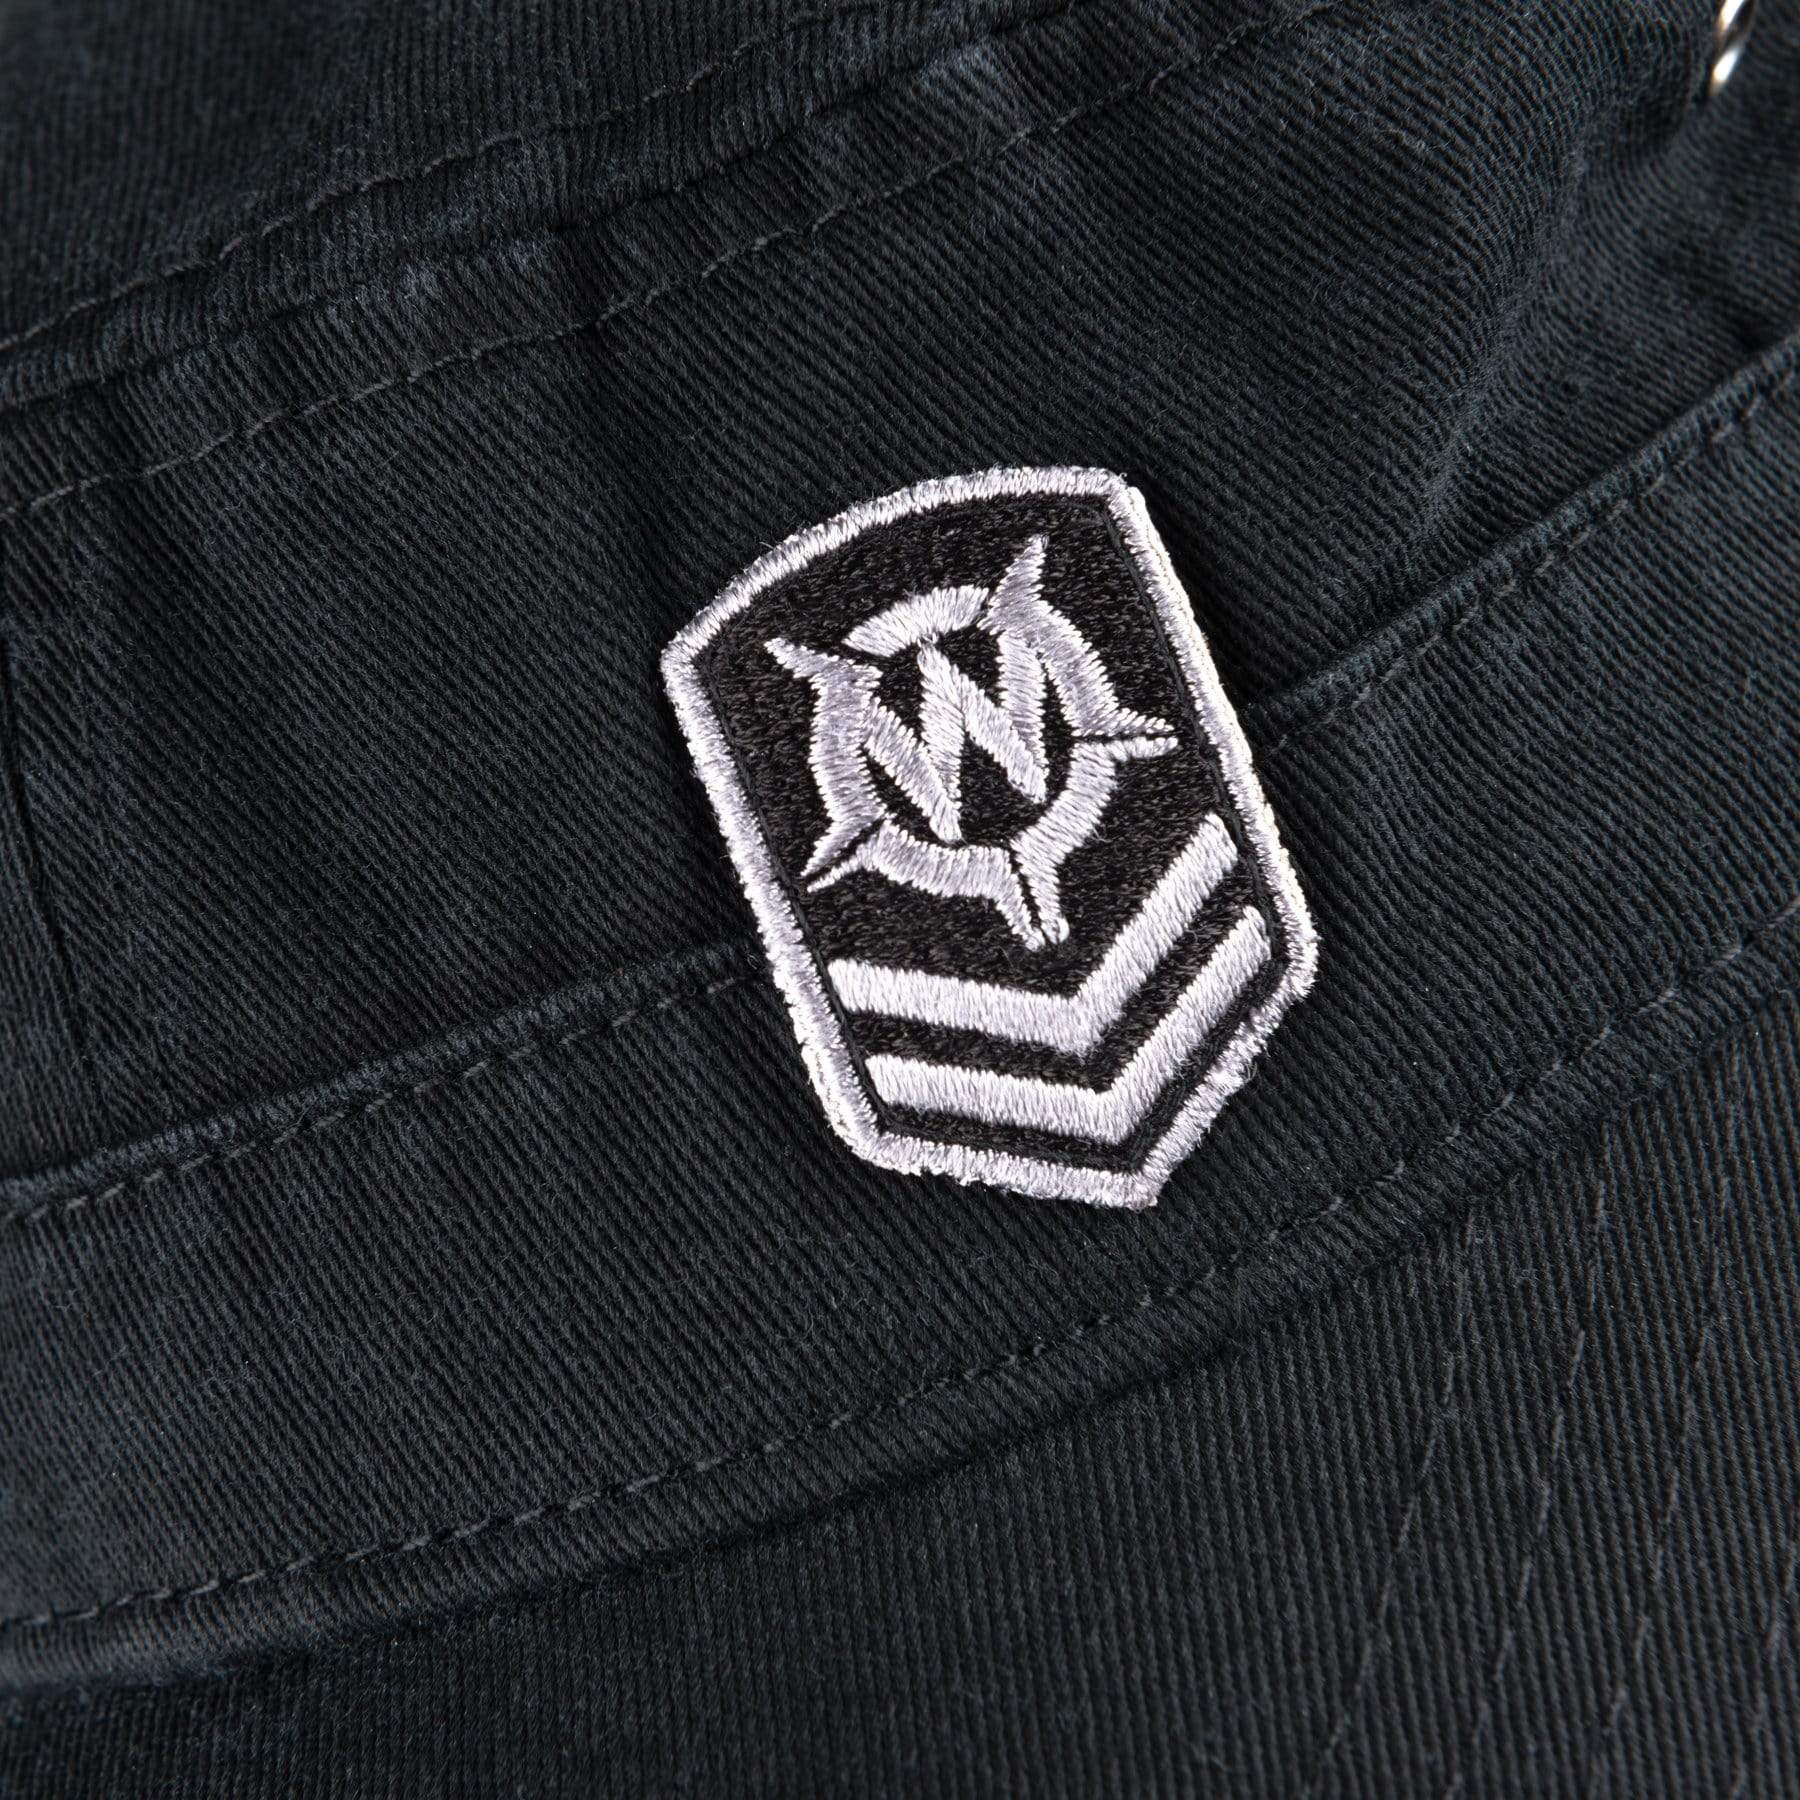 Wornstar Clothing Hat Enlisted Cadet Hat